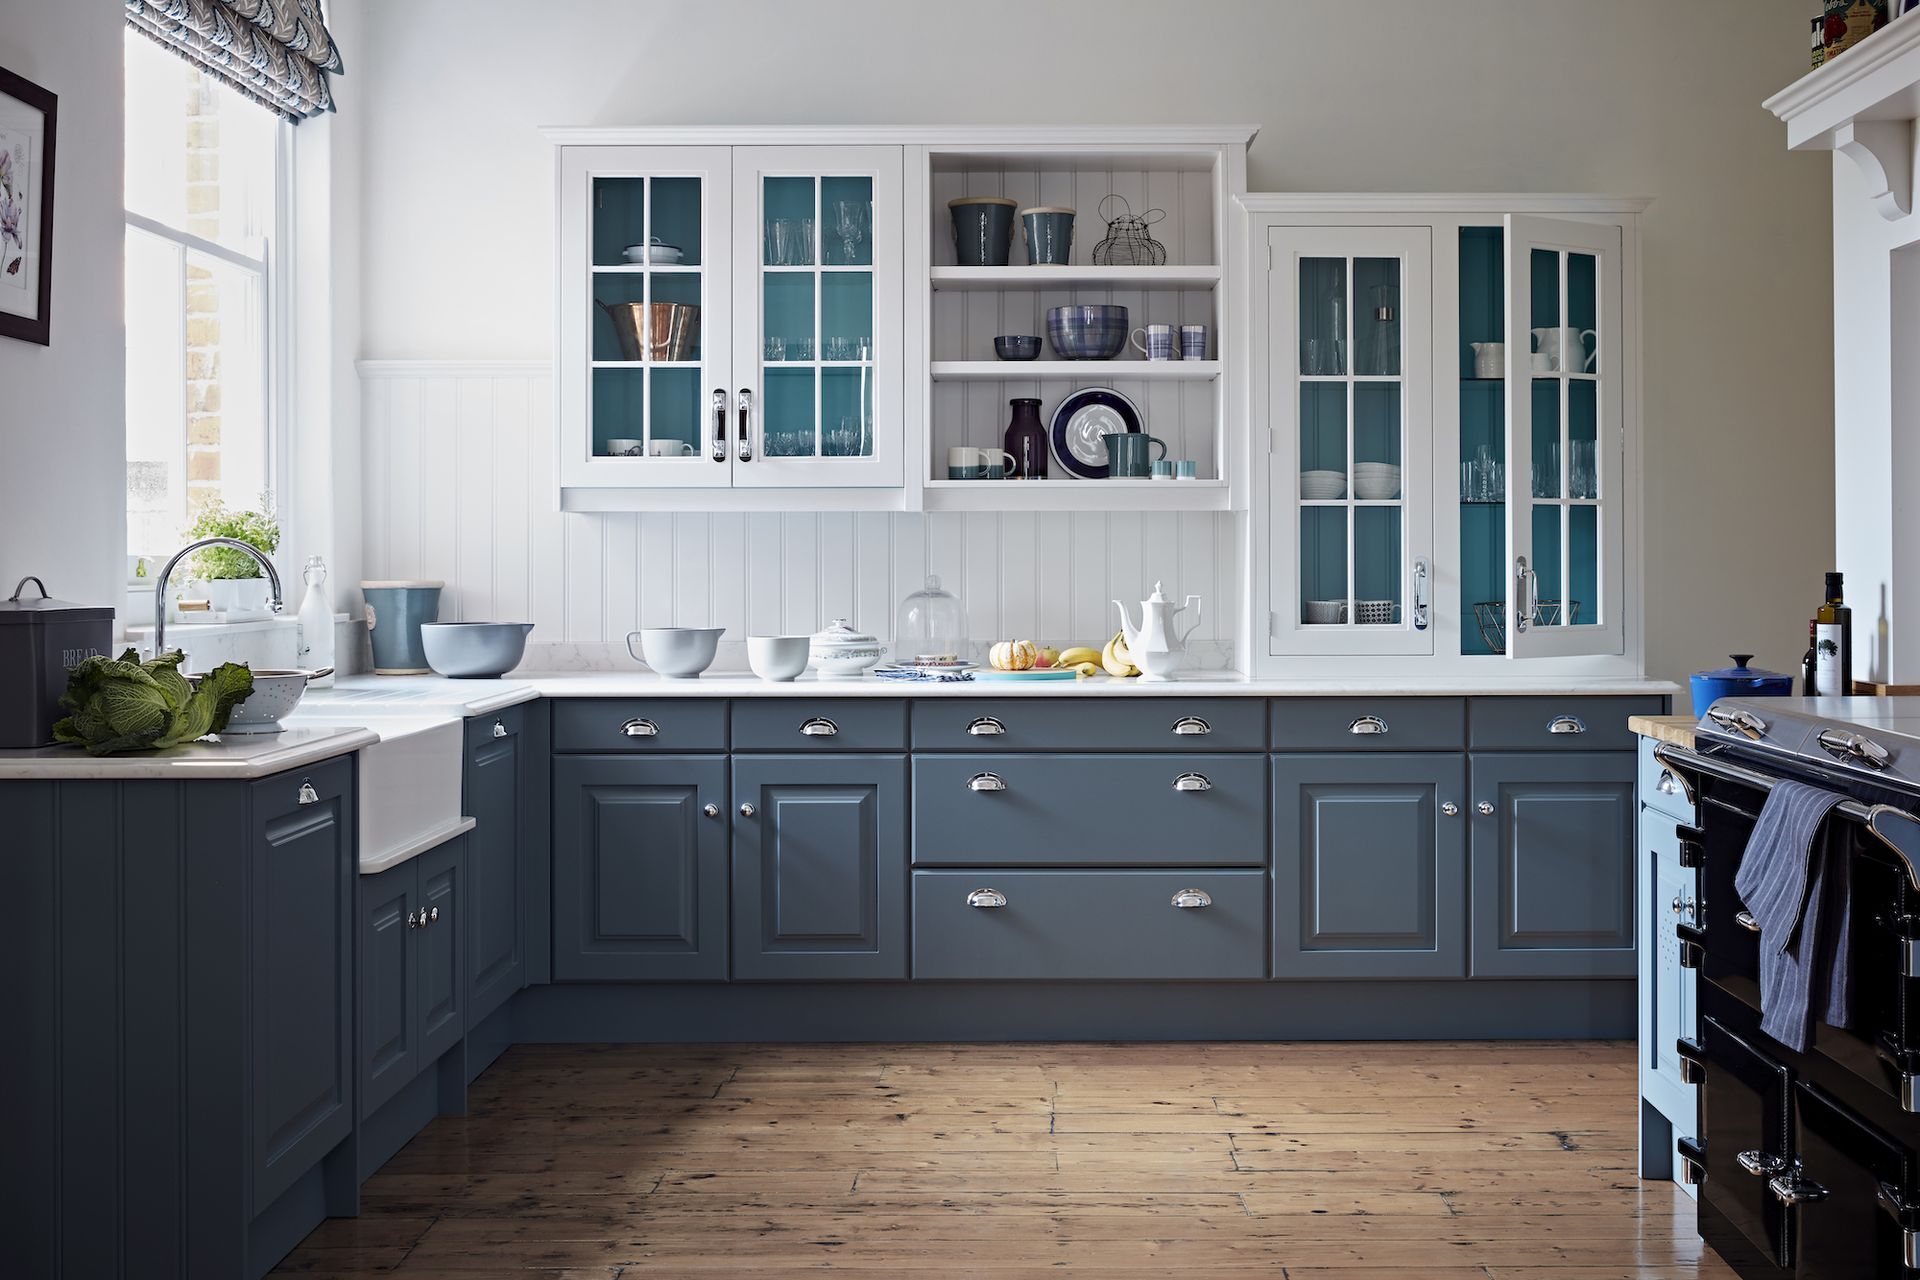 Cottage kitchen ideas – 19 pretty ways to decorate homey spaces